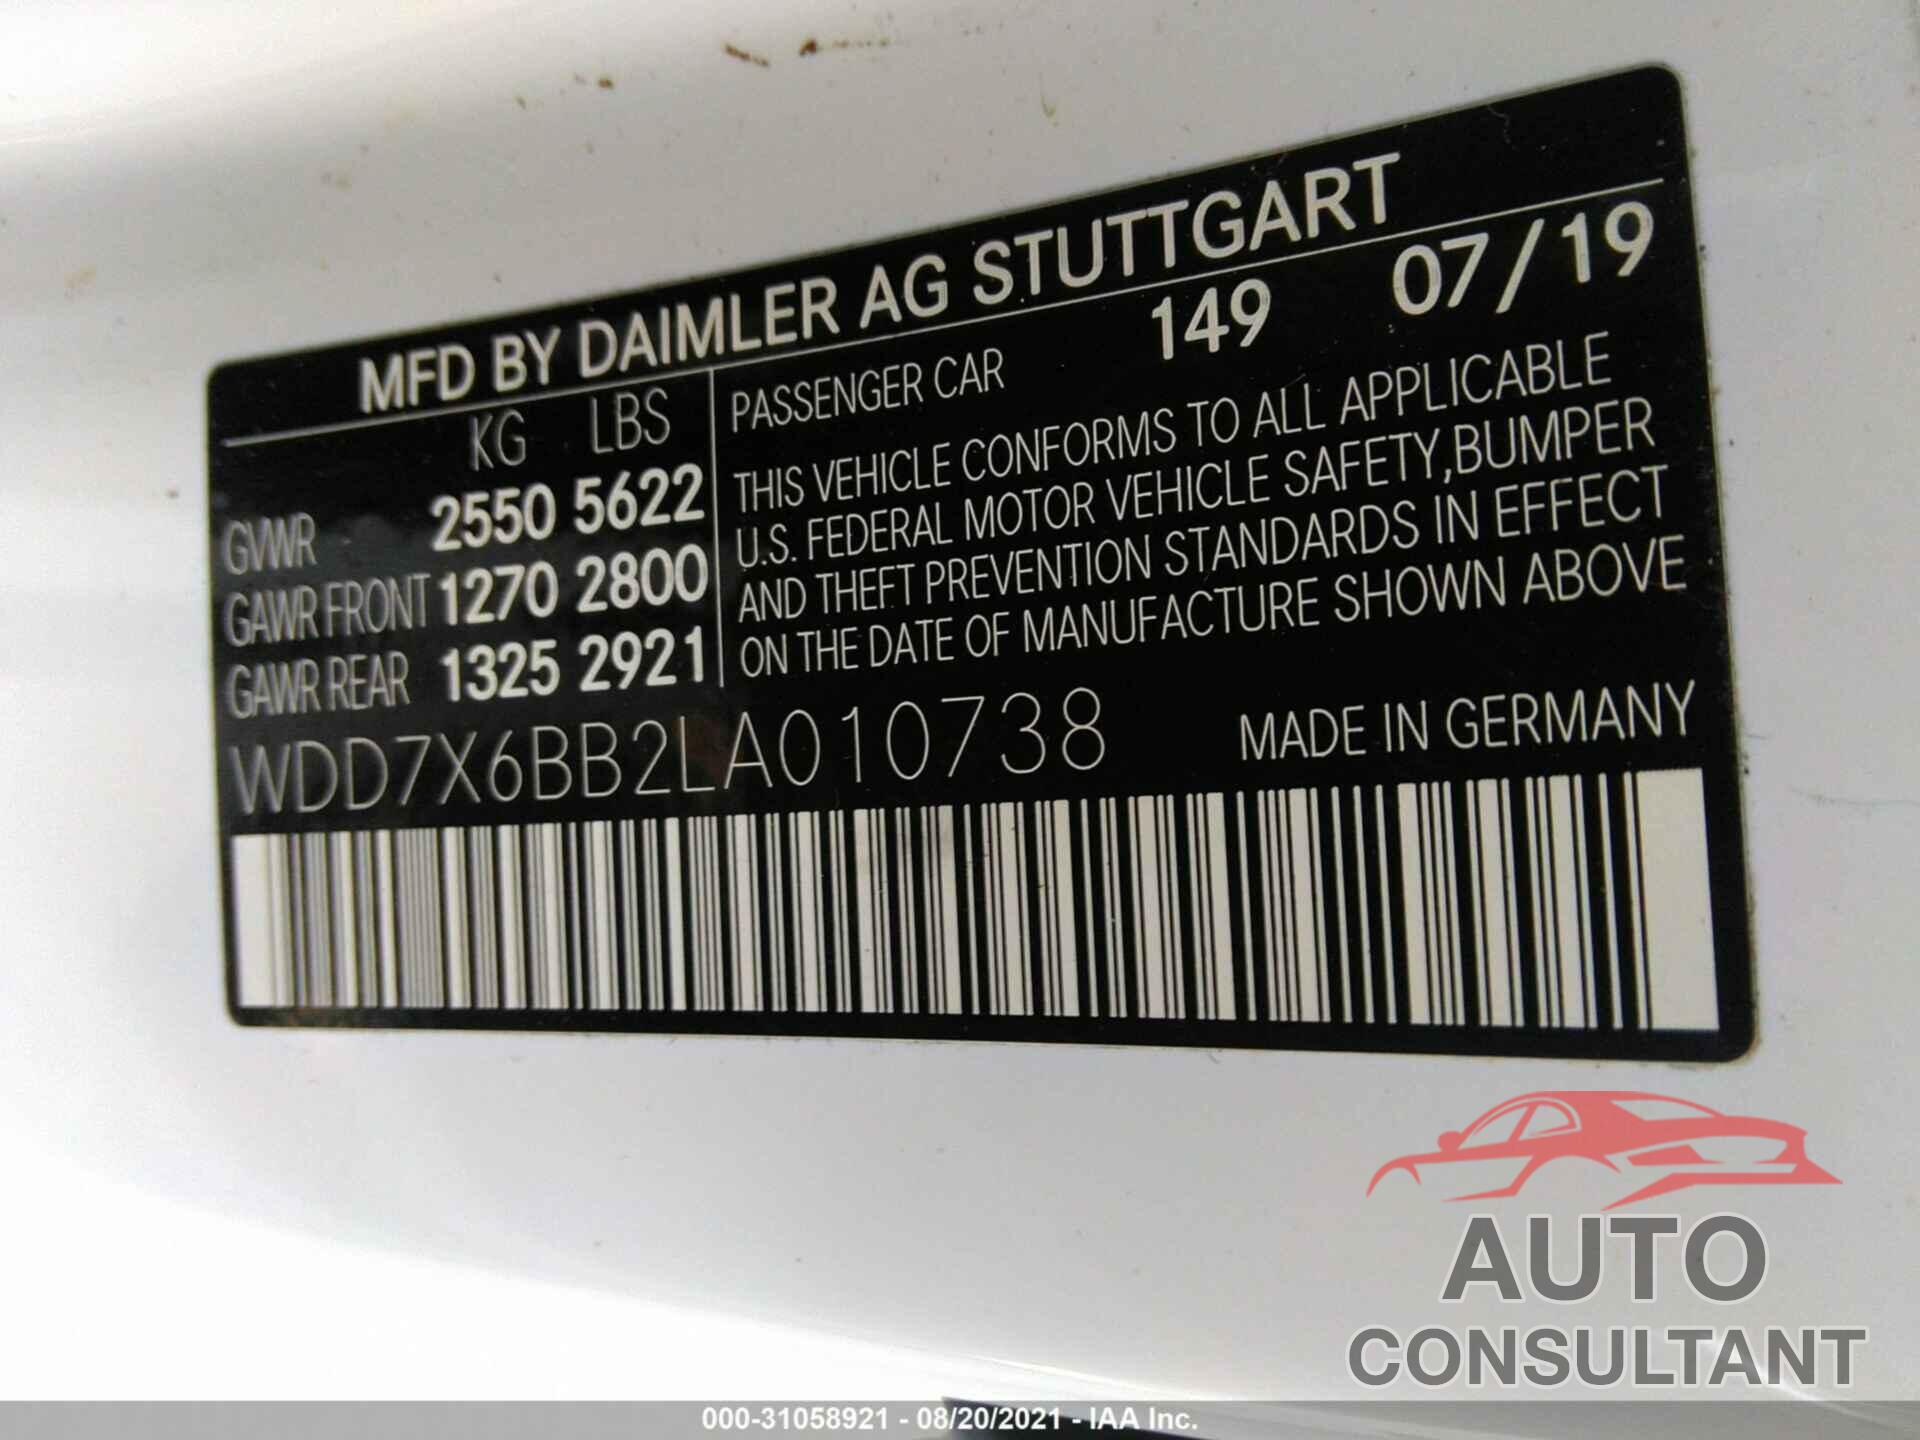 MERCEDES-BENZ AMG GT 2020 - WDD7X6BB2LA010738